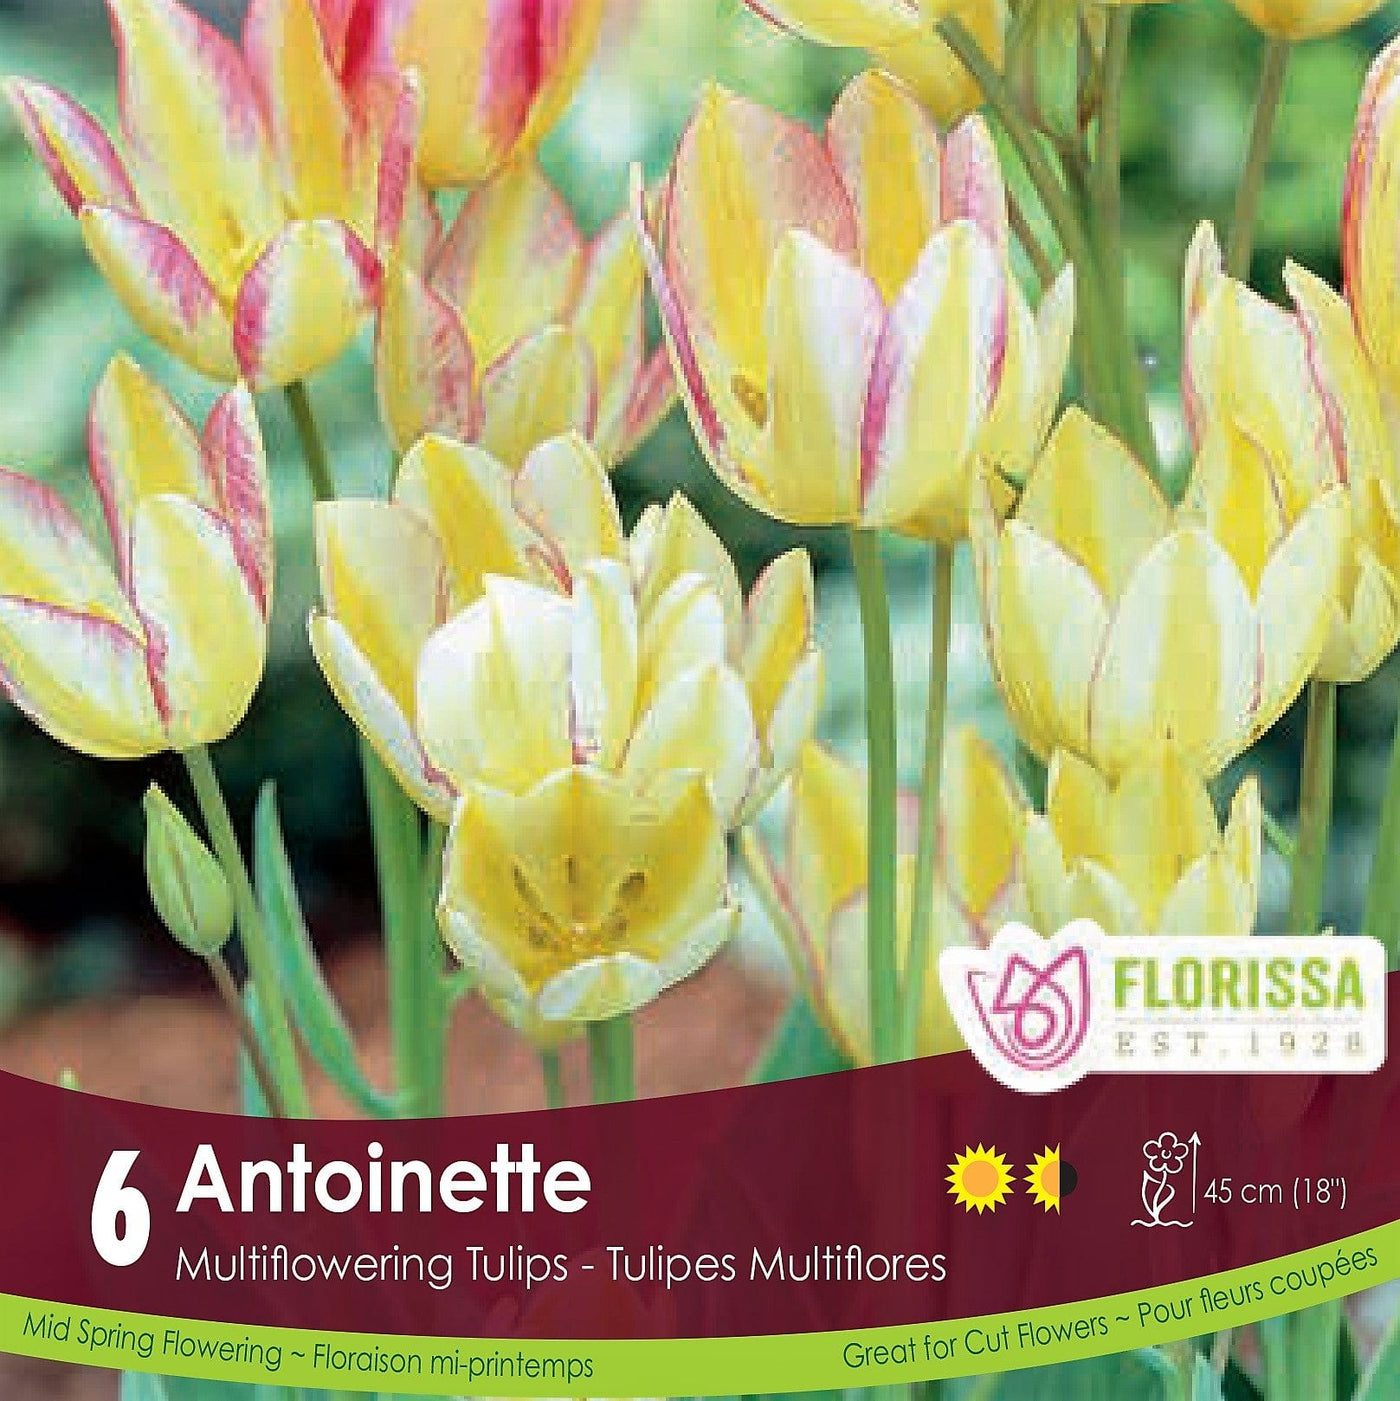 Yellow and Pink Multi flowering Tulip Antoinette 